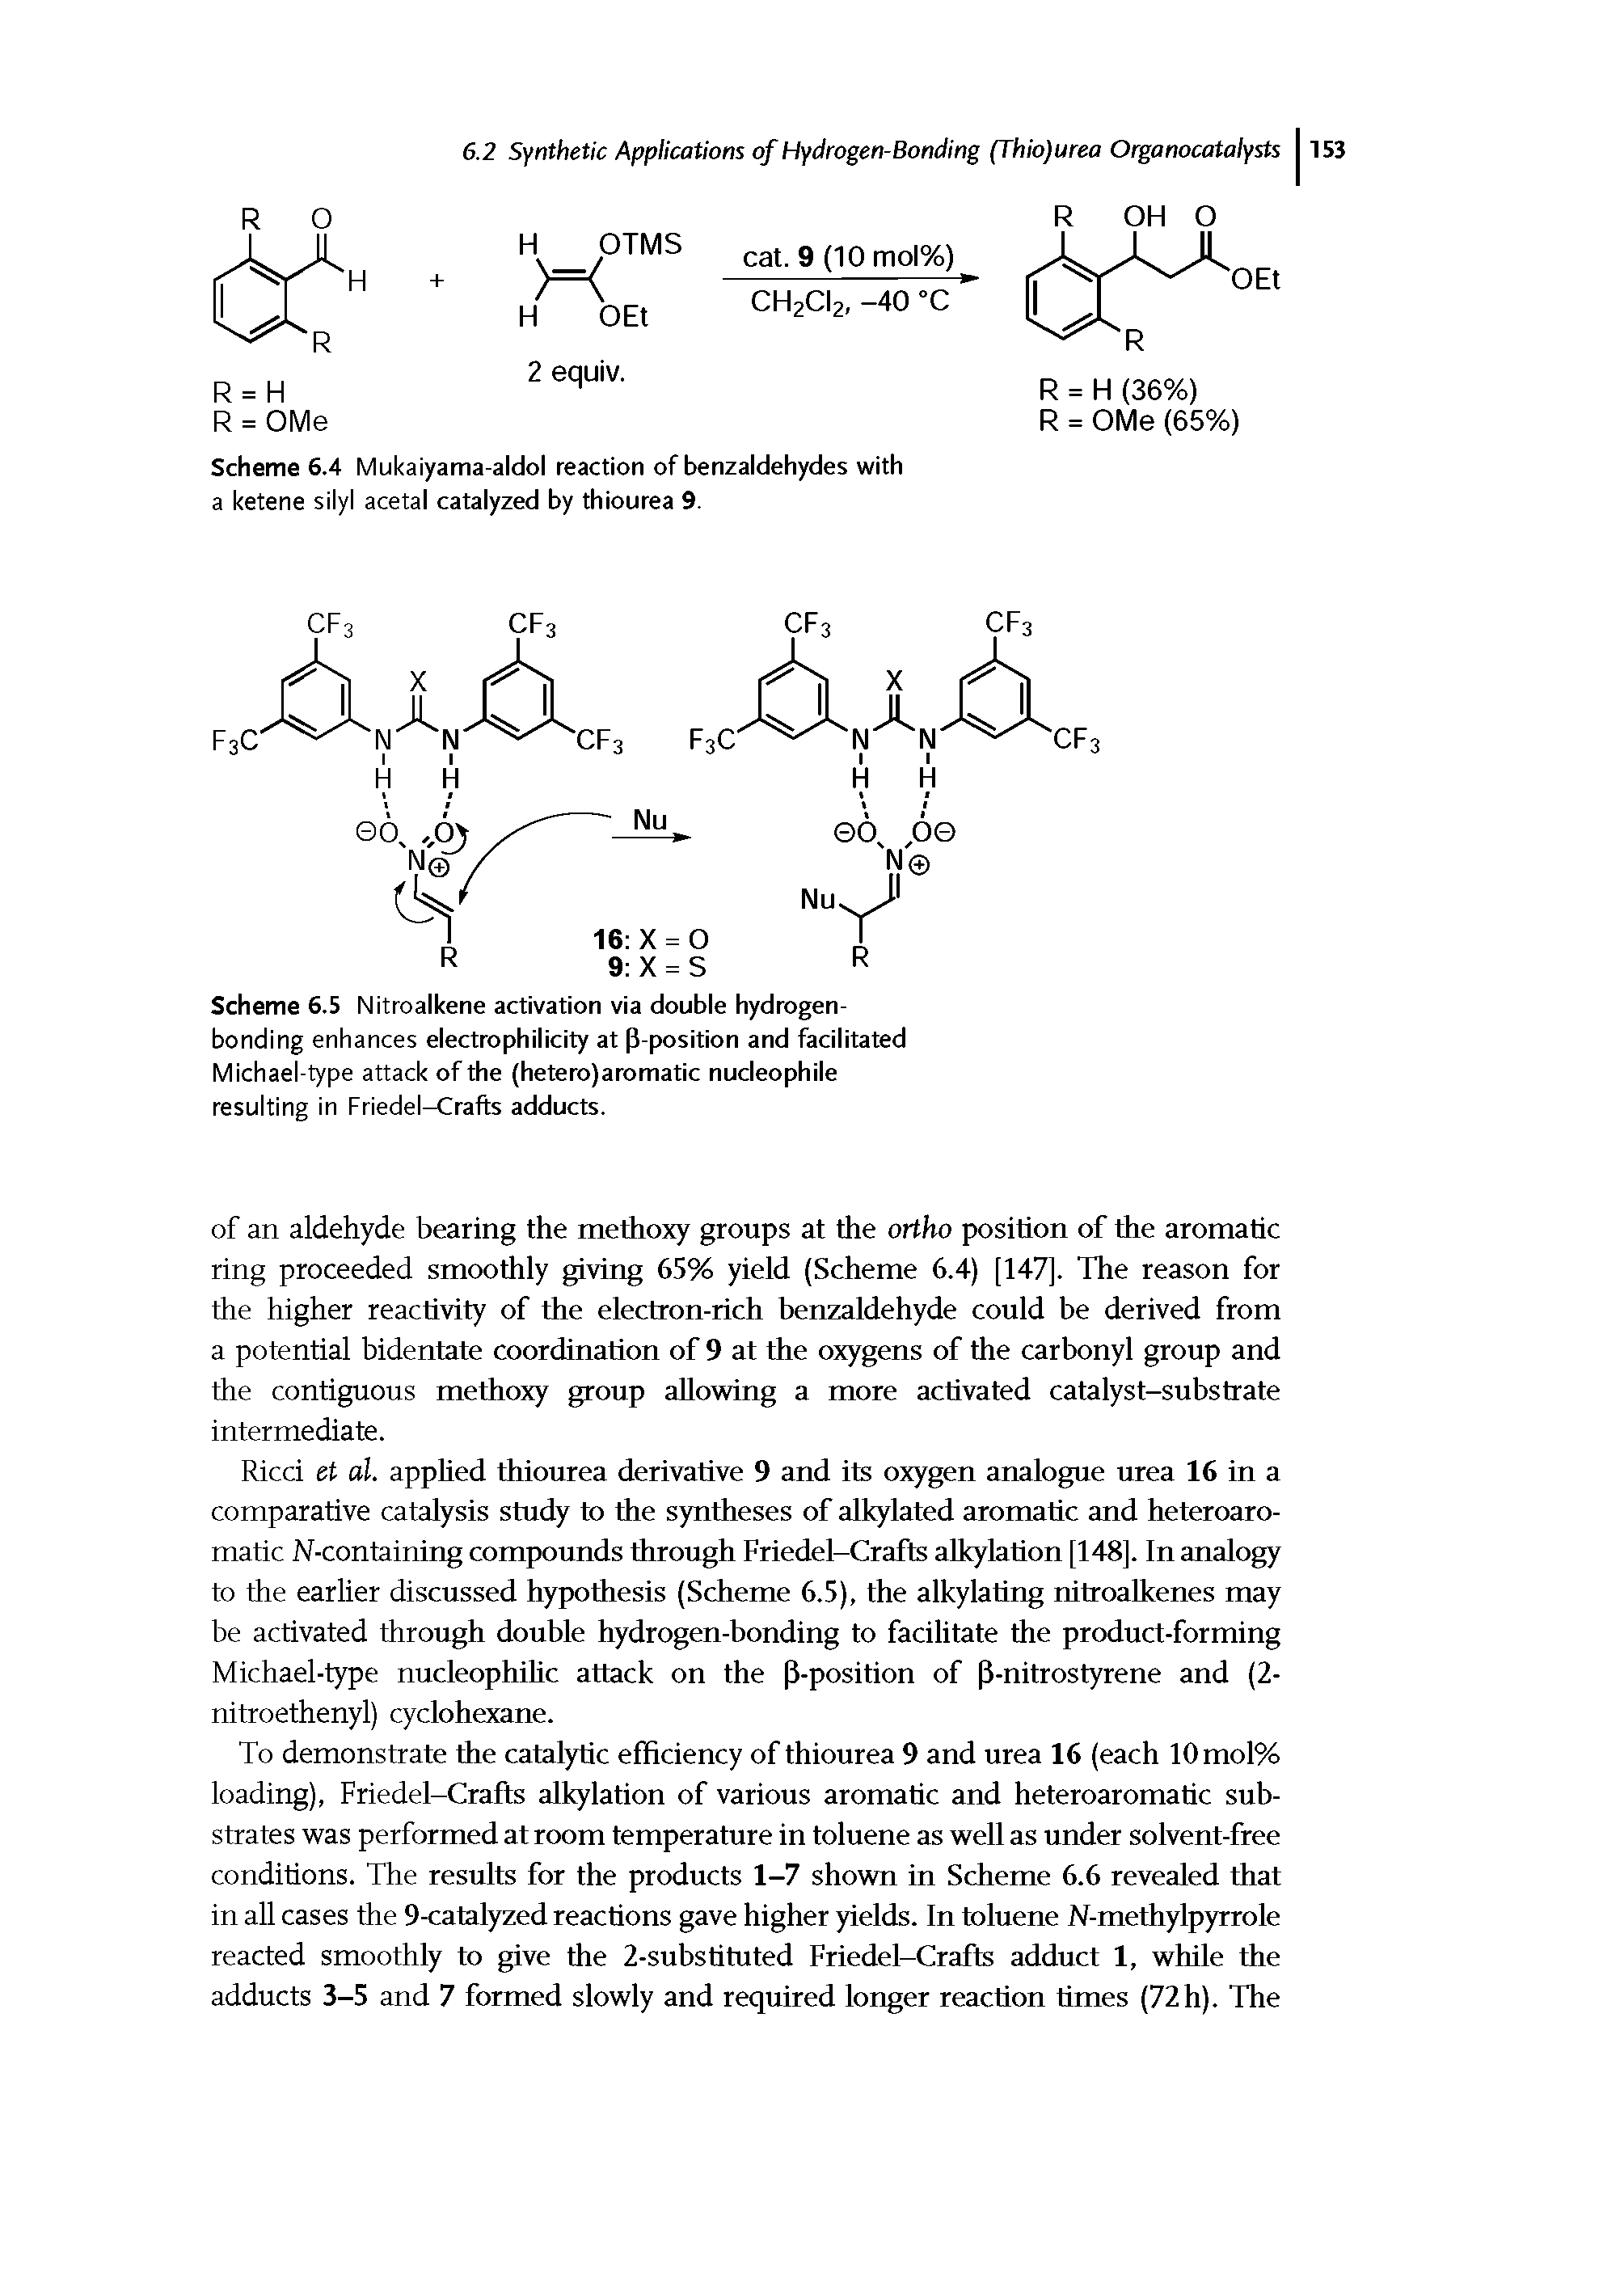 Scheme 6.4 Mukaiyama-aldol reaction of benzaldehydes with a ketene silyl acetal catalyzed by thiourea 9.